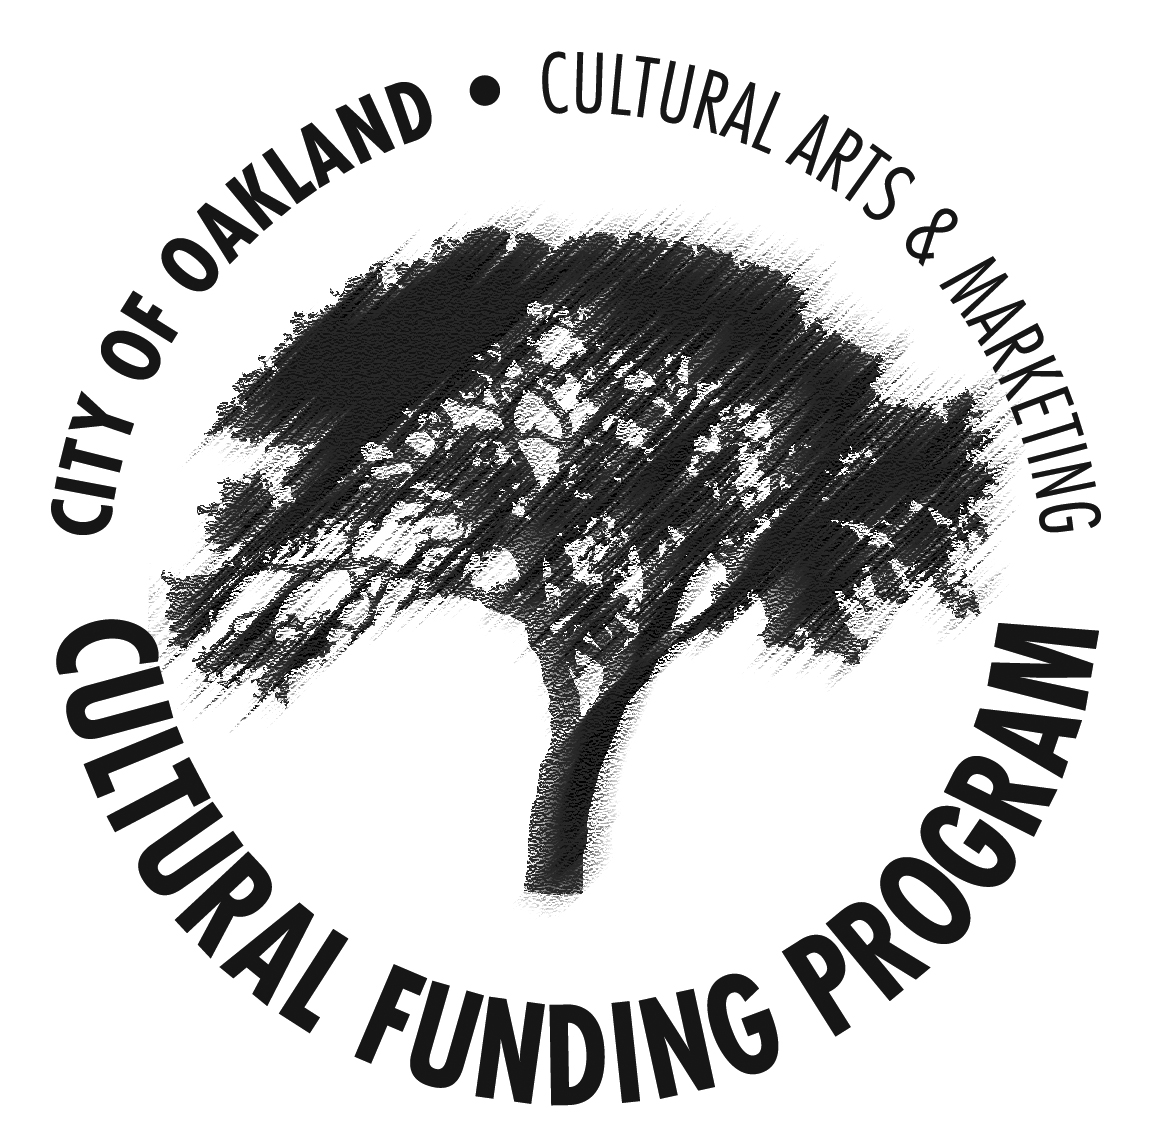 City of Oakland Cultural Funding Program